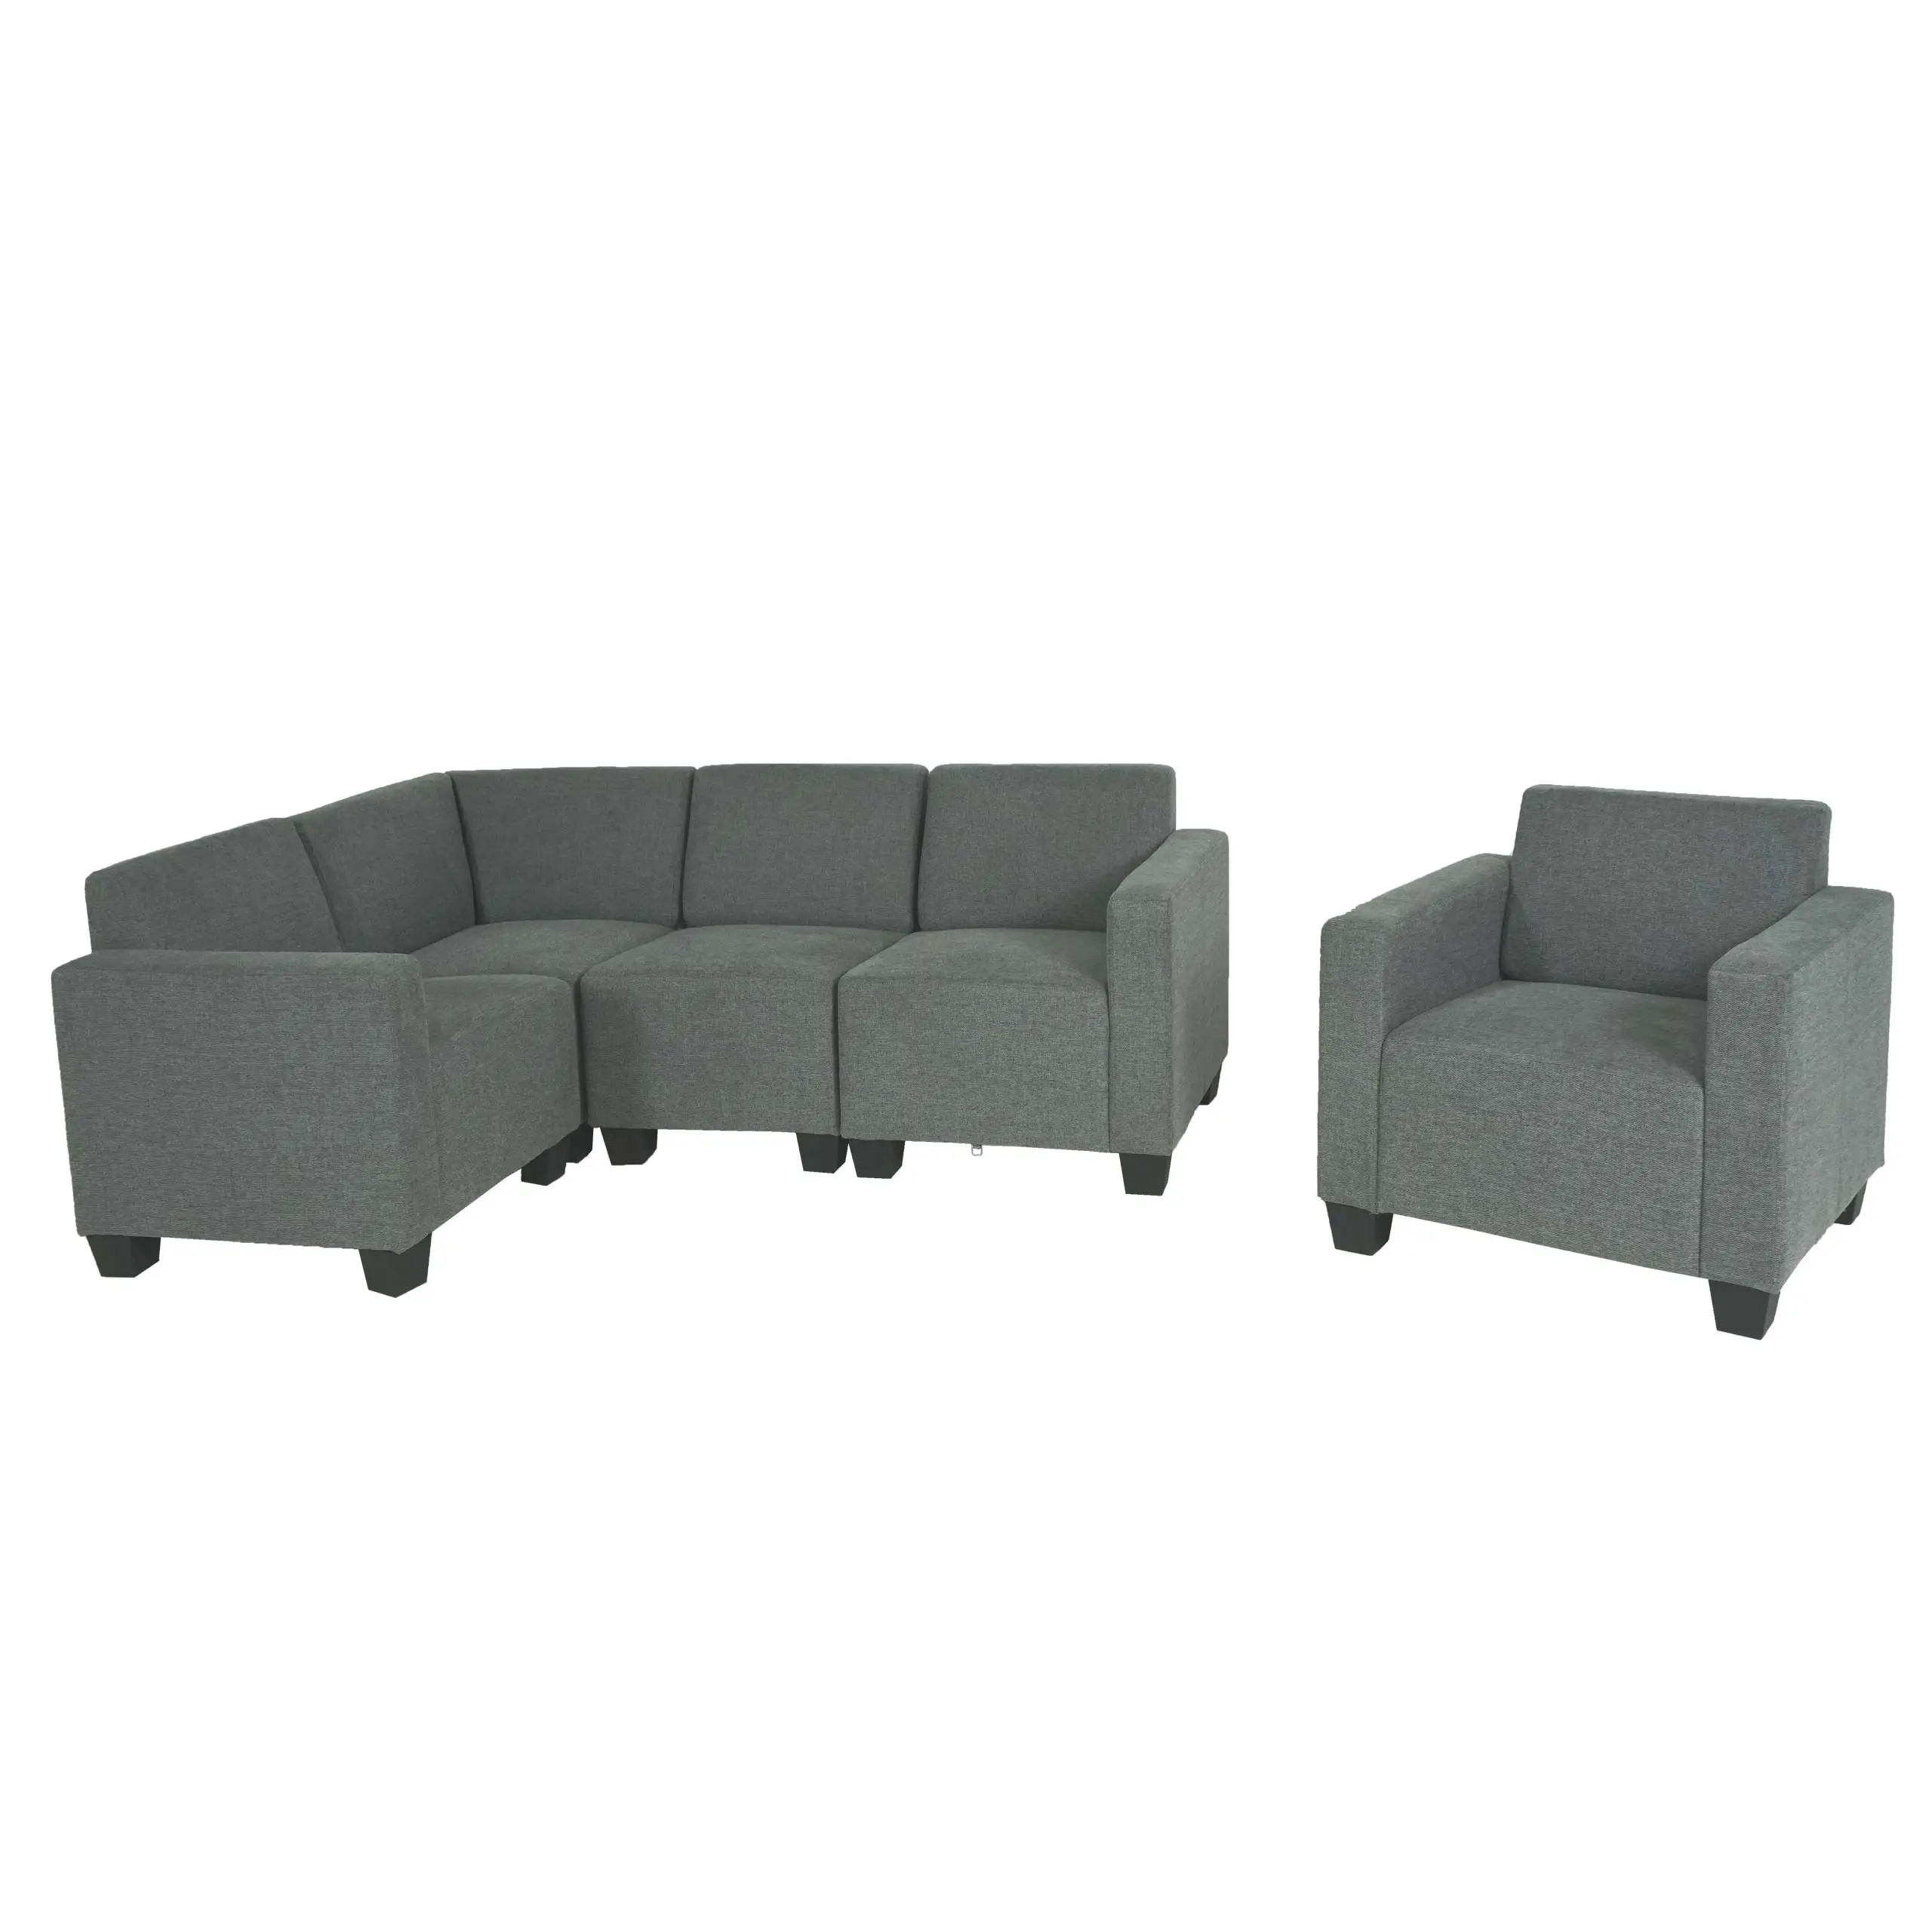 Sofa-System (5-teilig) Moncalieri